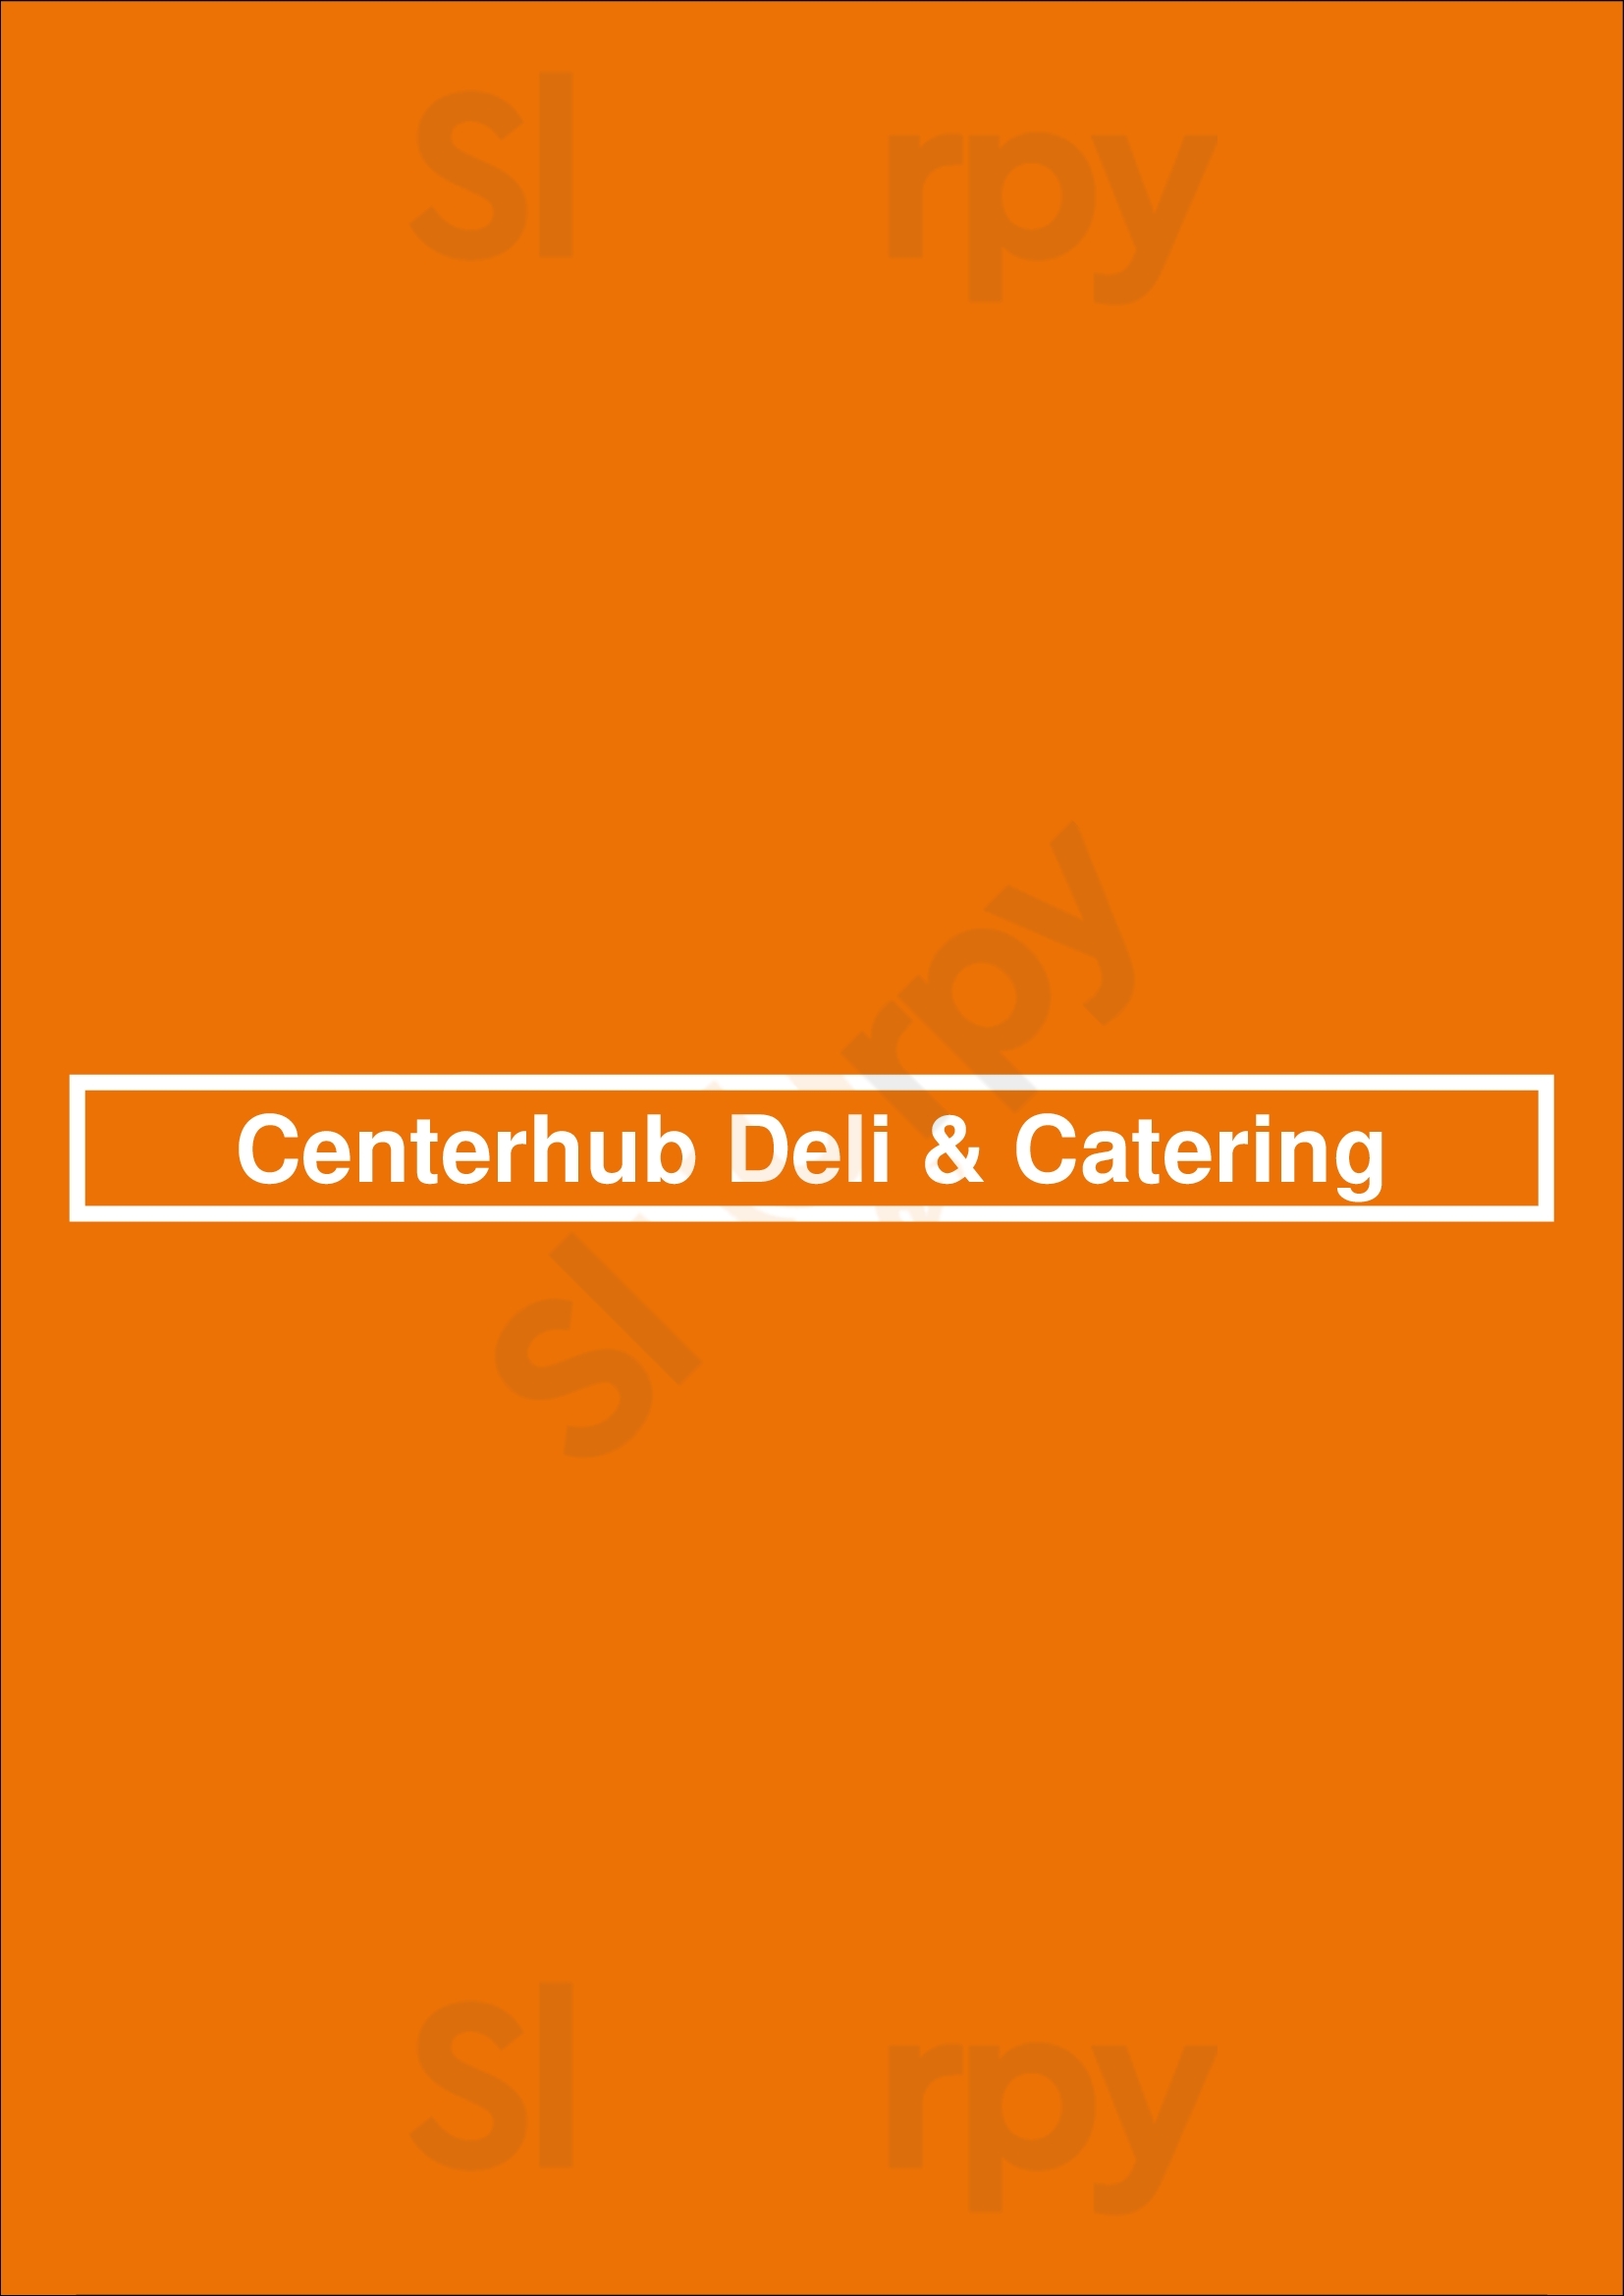 Centerhub Deli & Catering Cincinnati Menu - 1